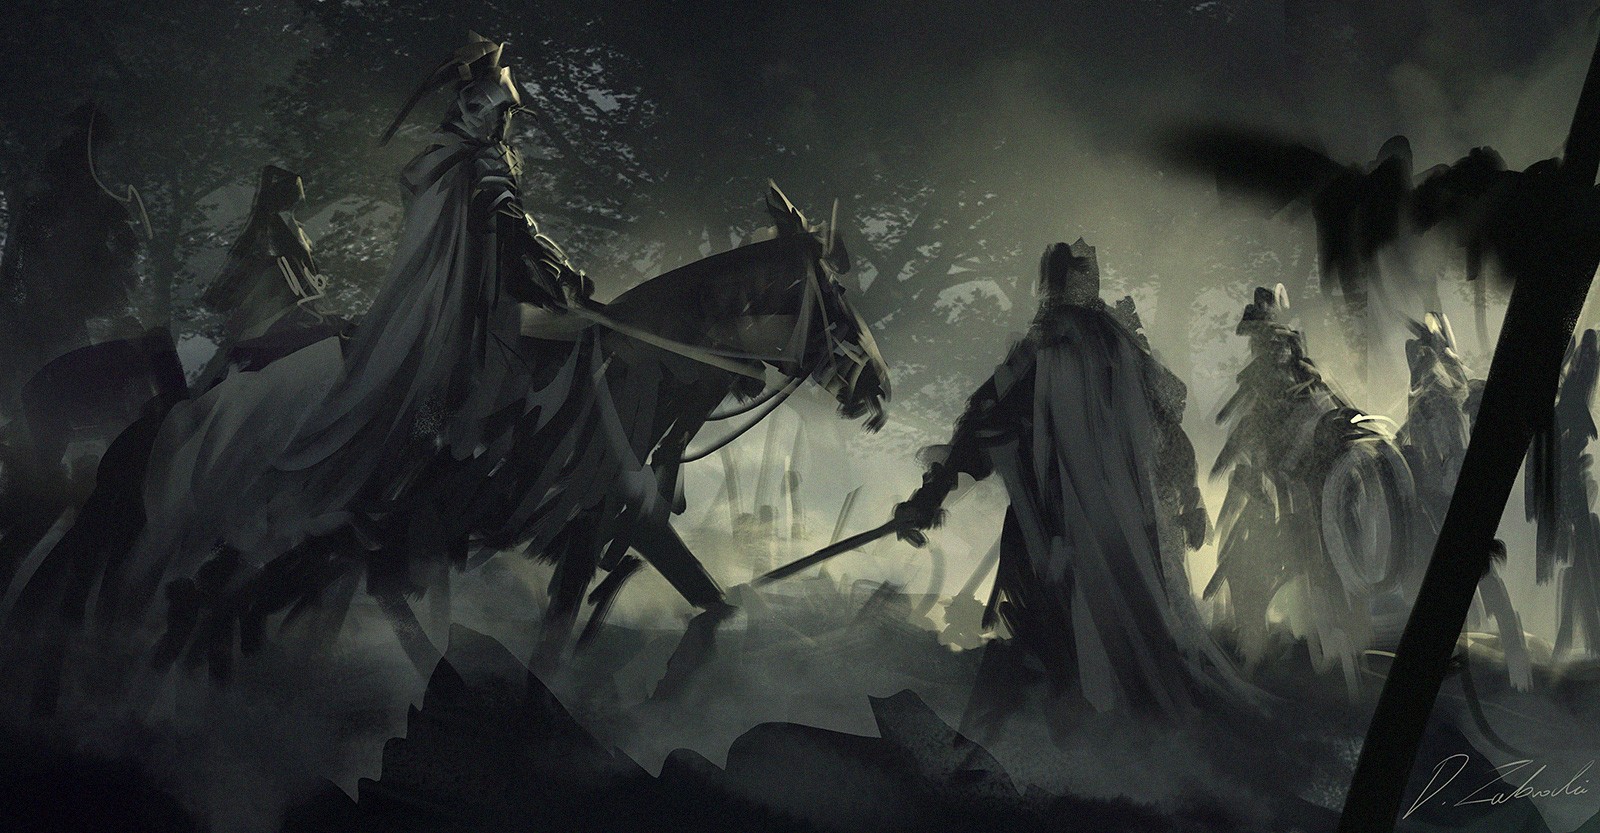 General 1600x833 fantasy art knight Darek Zabrocki  artwork horse soldier sword